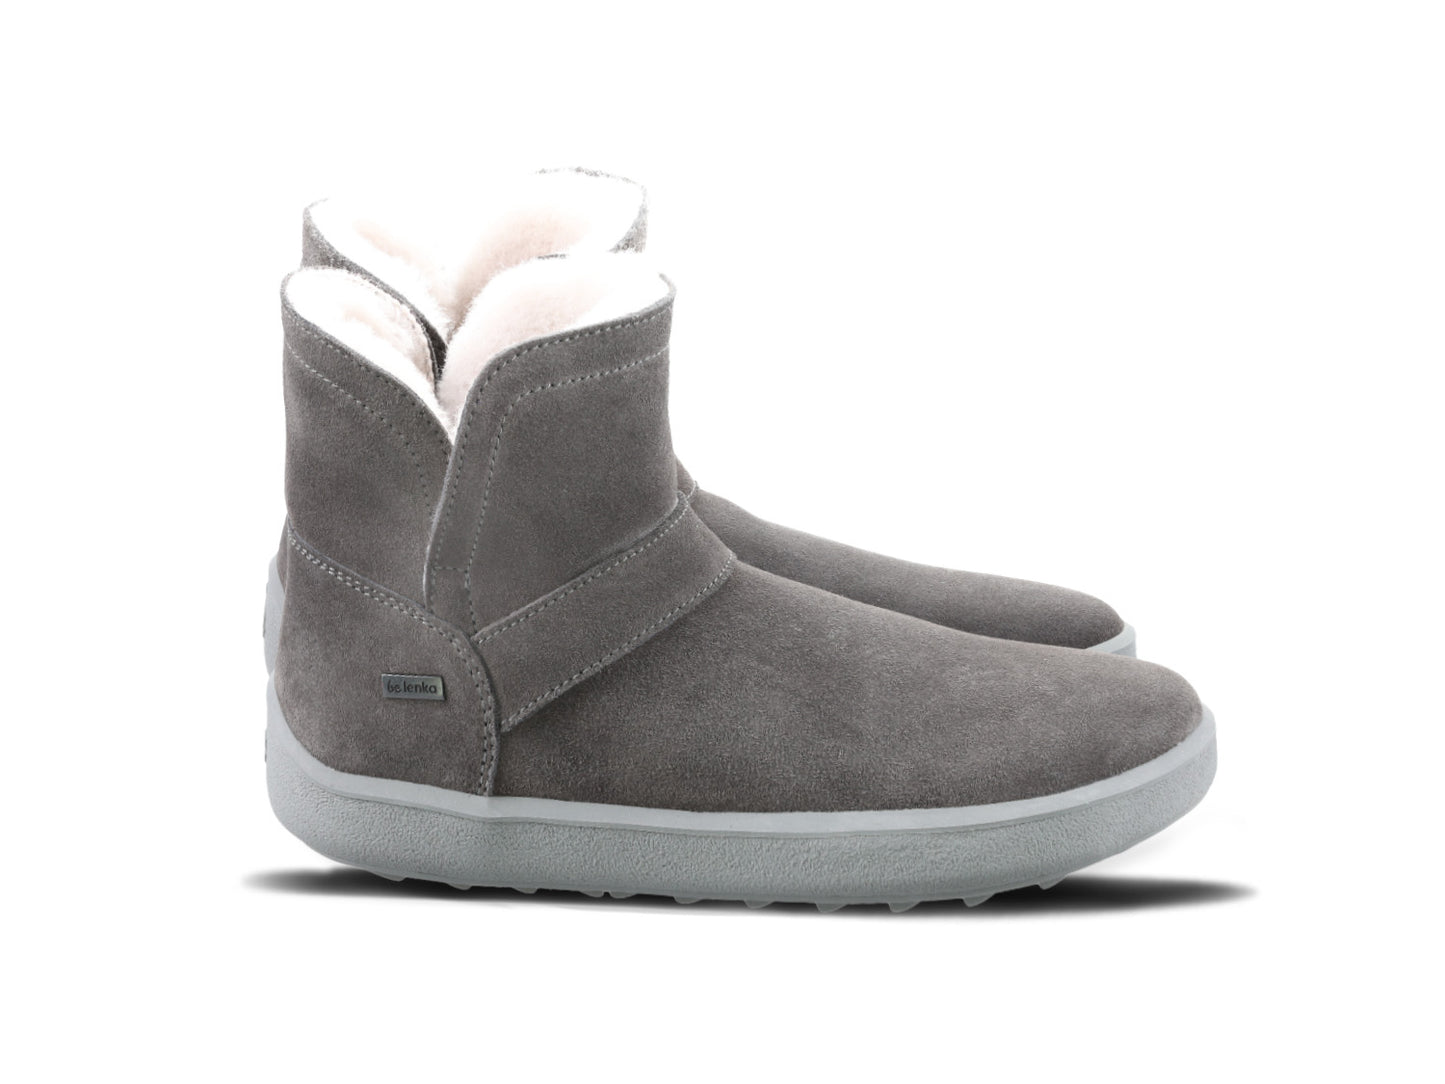 Barefoot Shoes Be Lenka Polaris - All Grey 9 OzBarefoot Australia